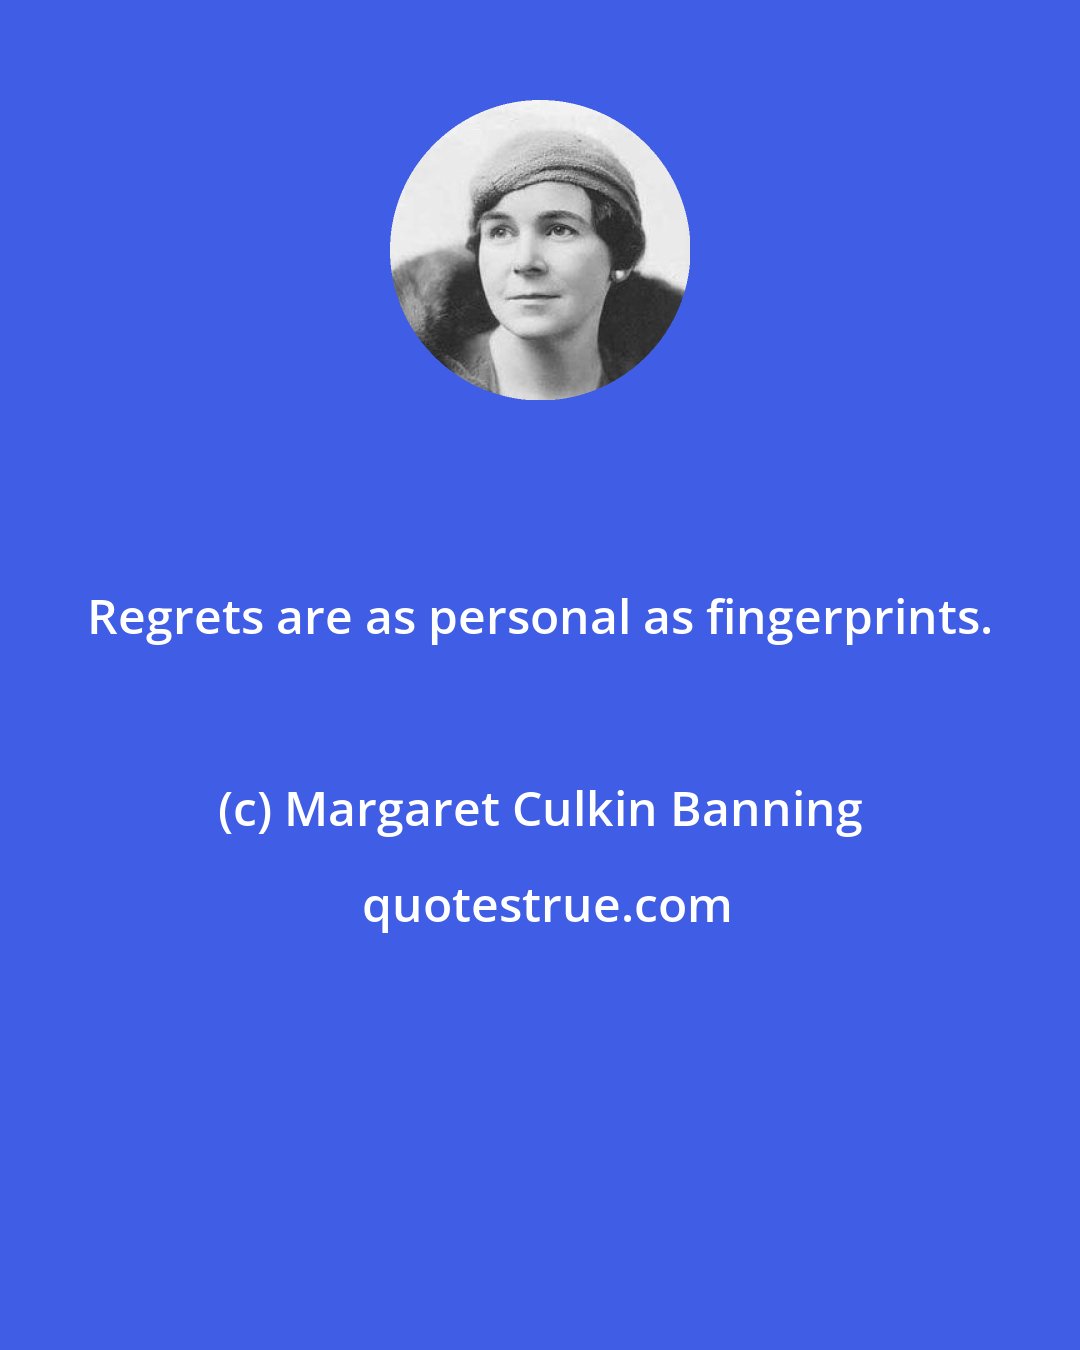 Margaret Culkin Banning: Regrets are as personal as fingerprints.